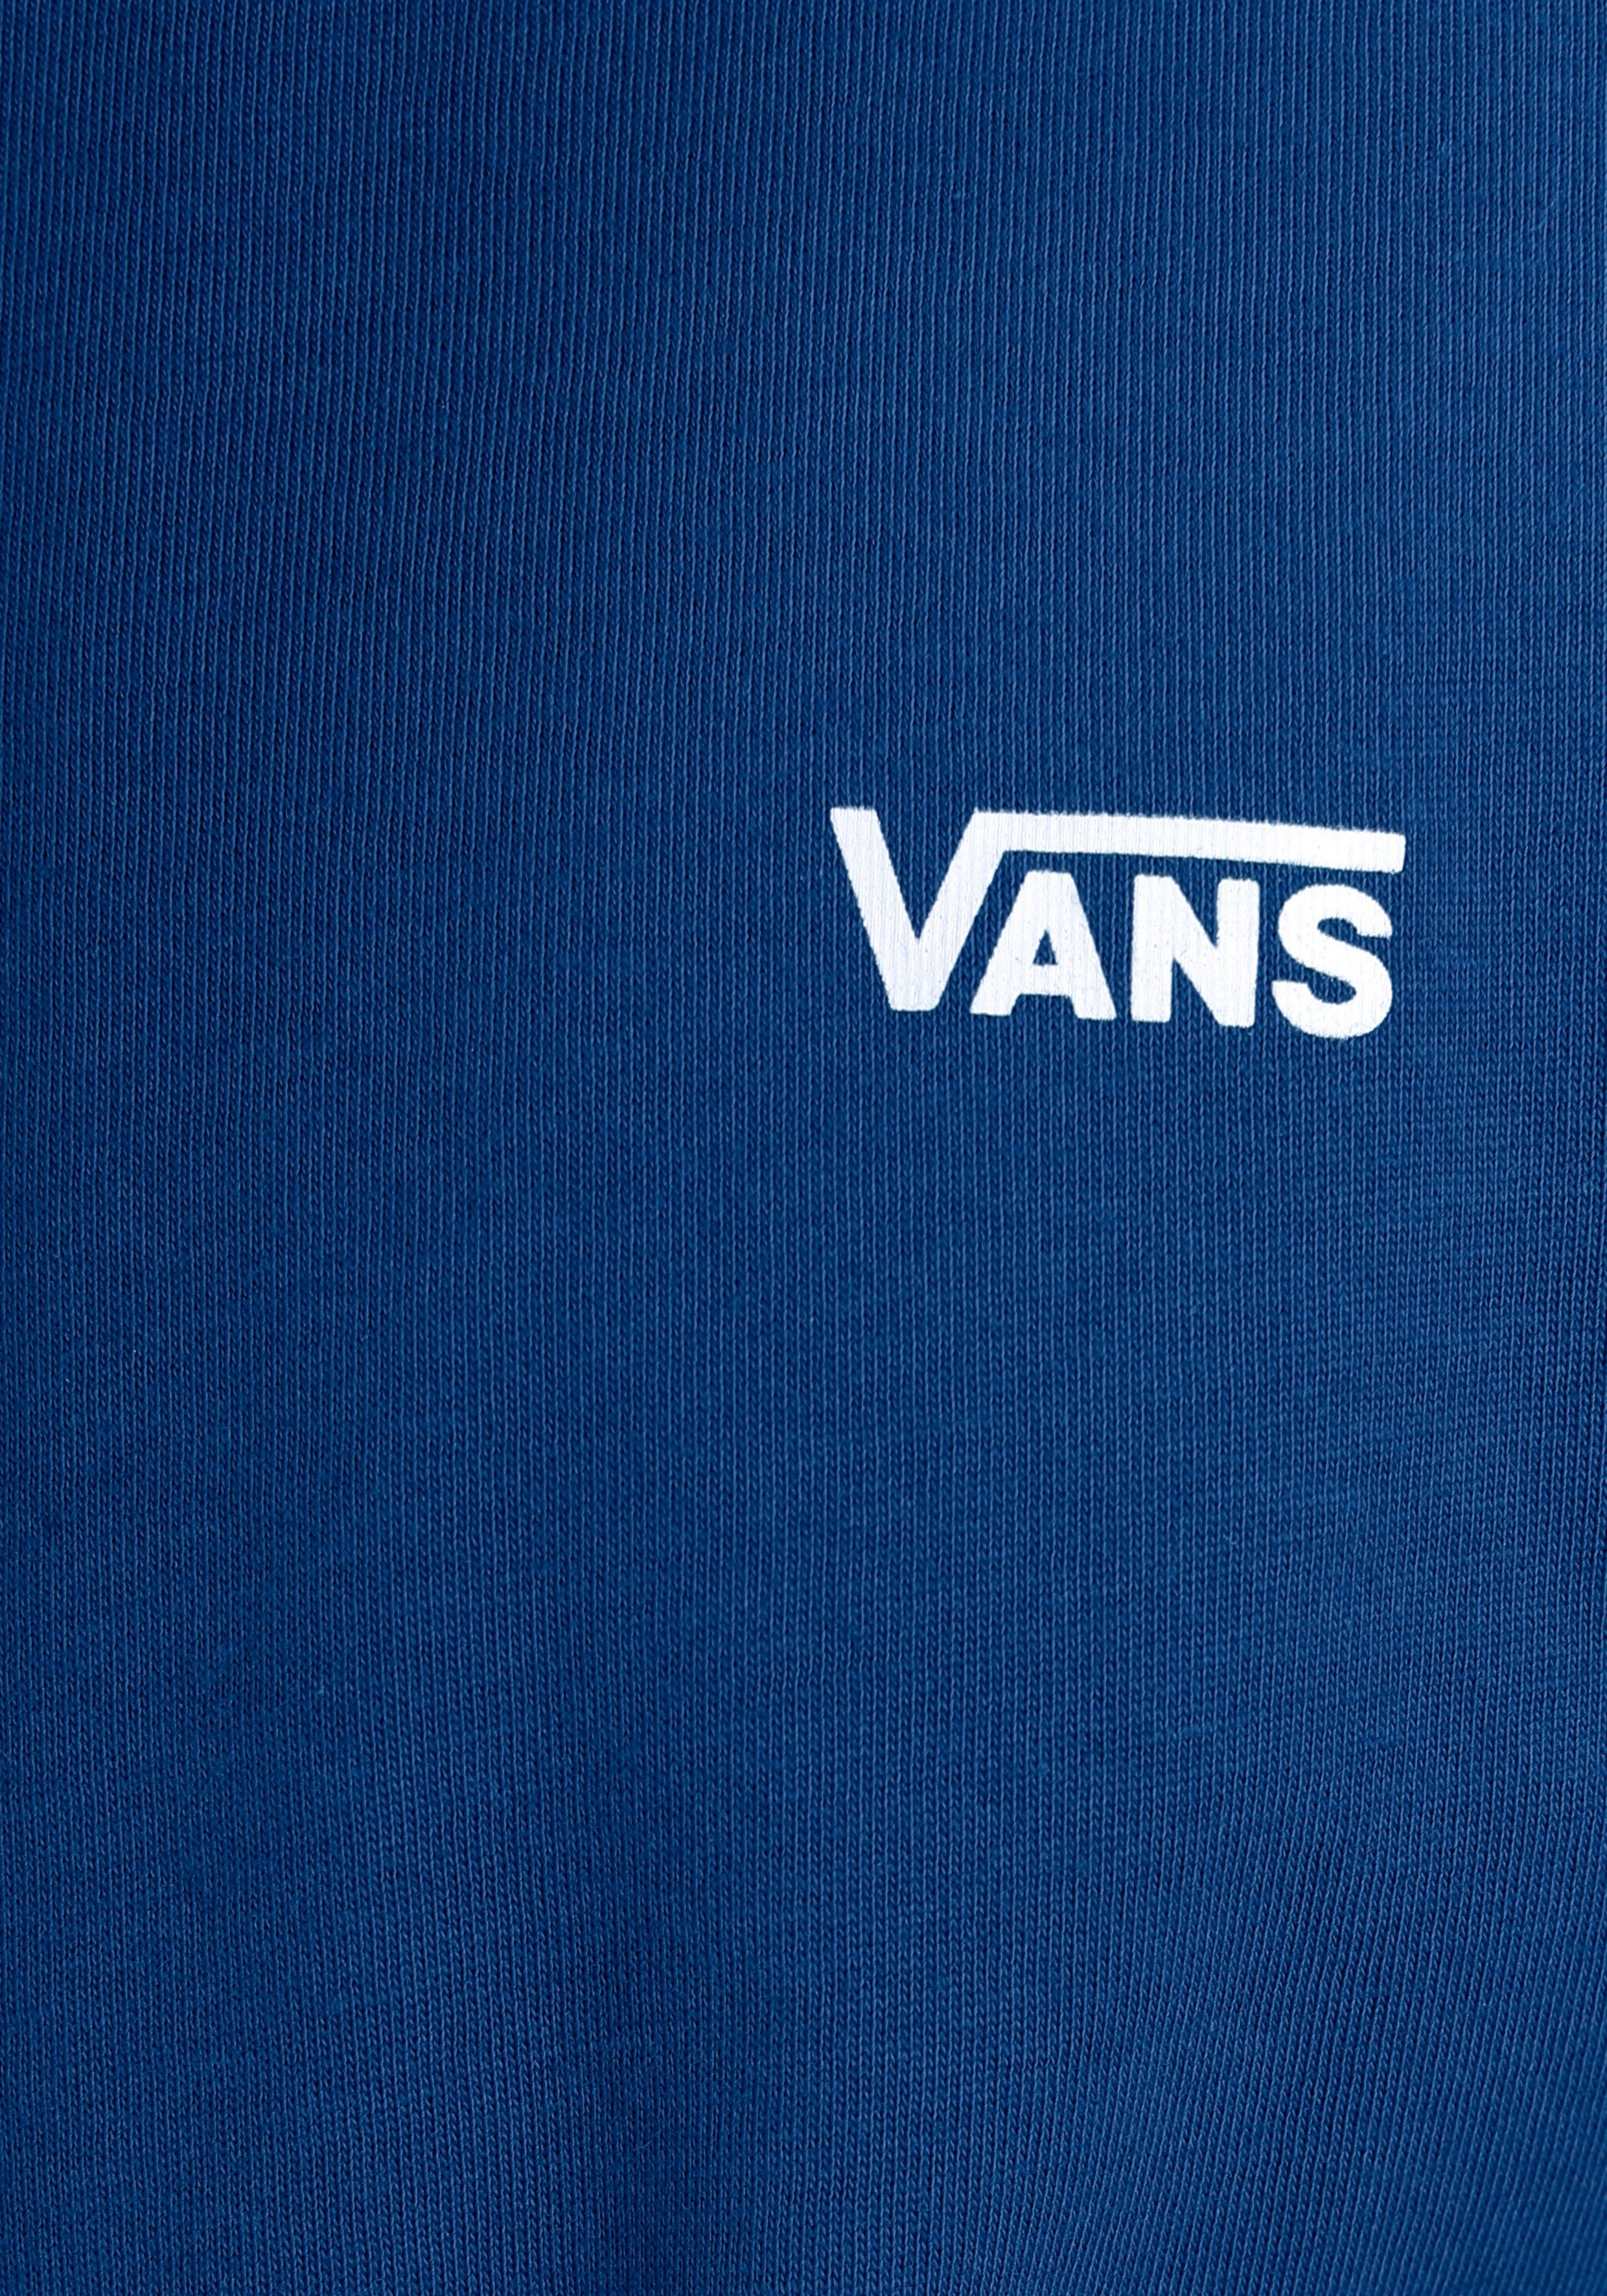 CHEST BOYS true T-Shirt Vans LEFT TEE BY blue